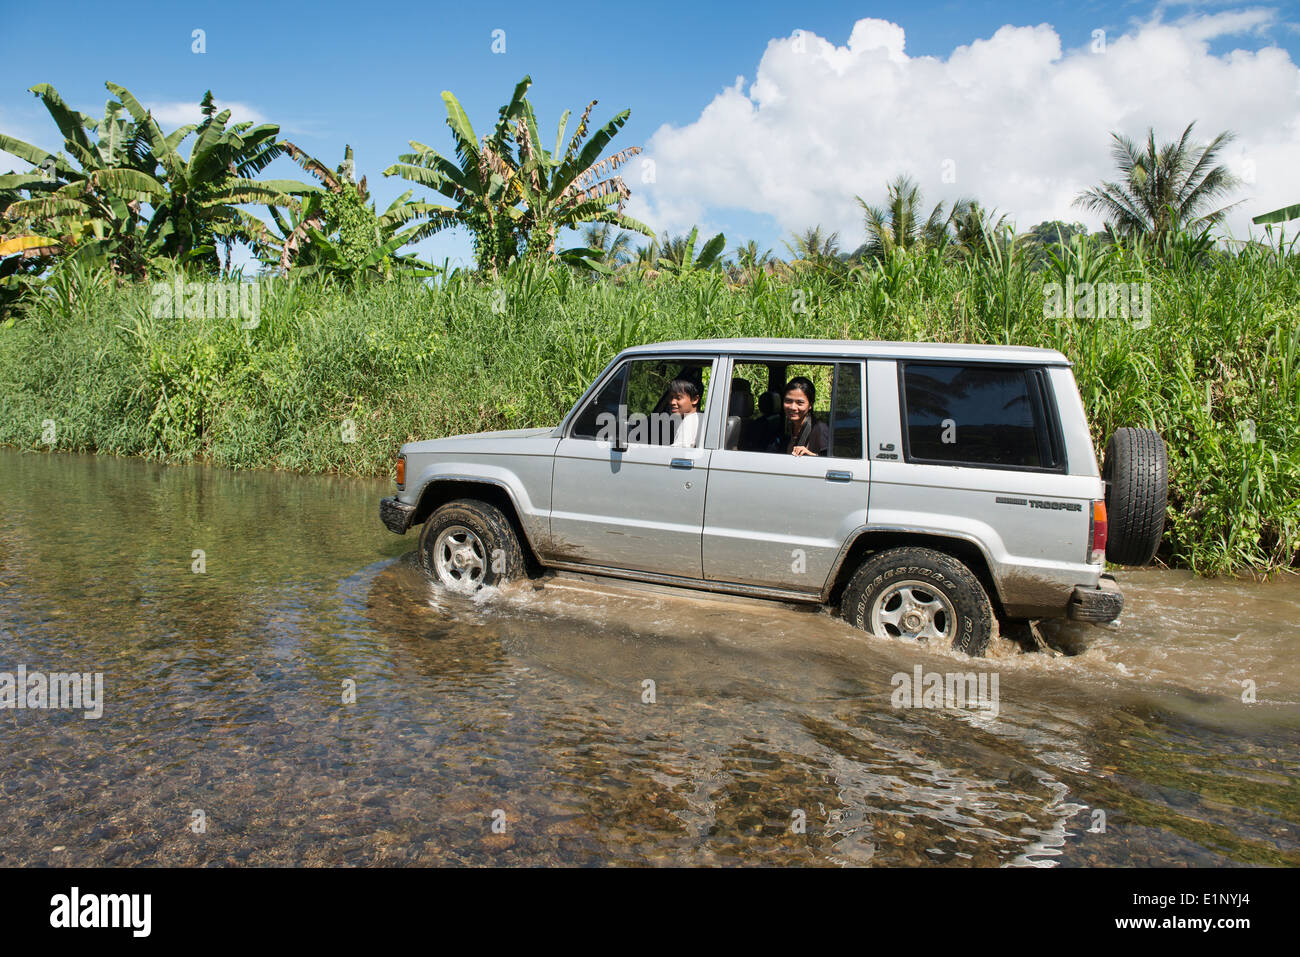 jeep navigating river crossing to Sukamade Beach, Meru Betiri National Park, Java, Indonesia Stock Photo